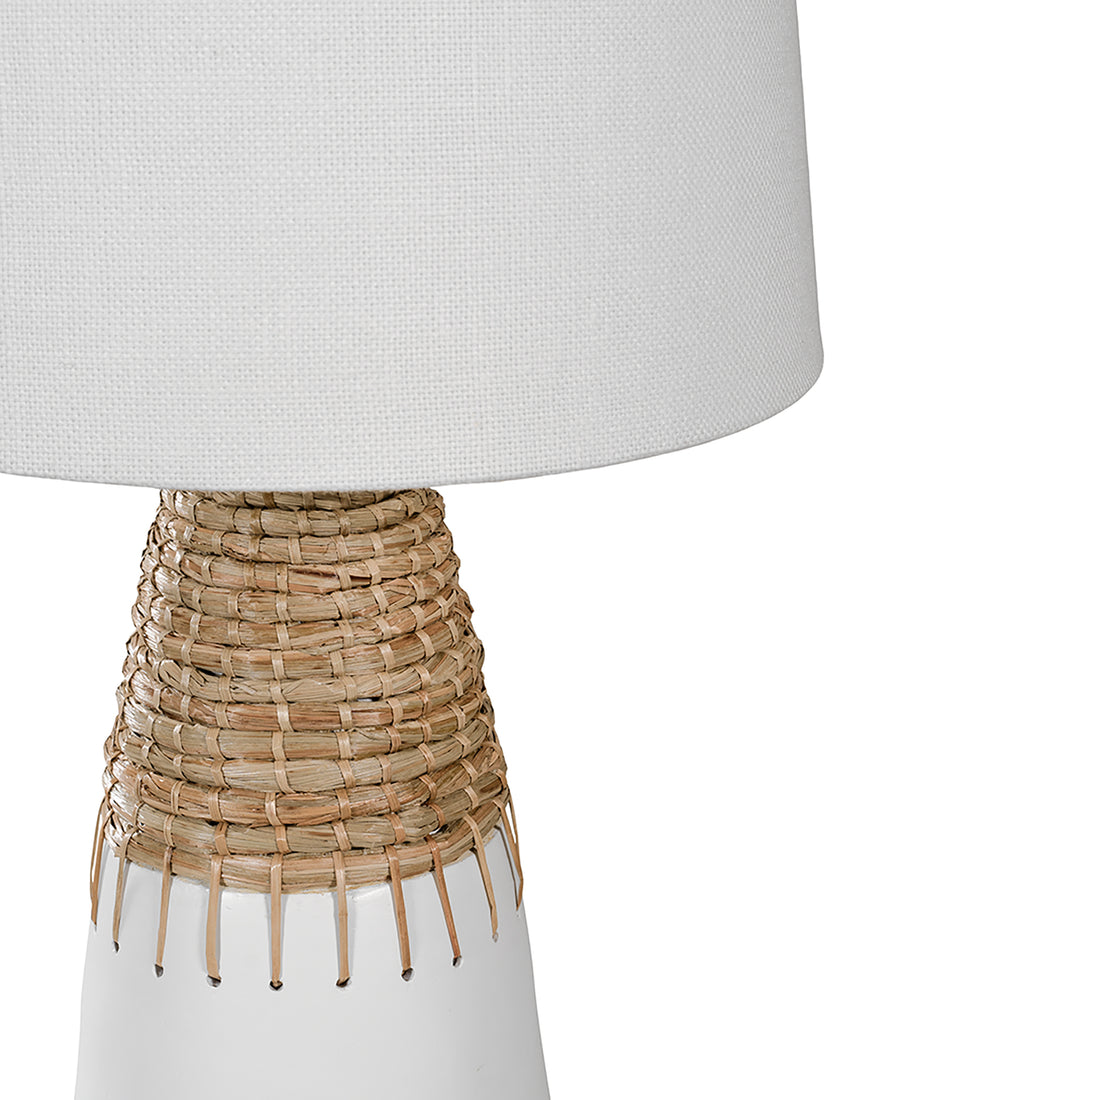 Induka Table Lamp | Tall